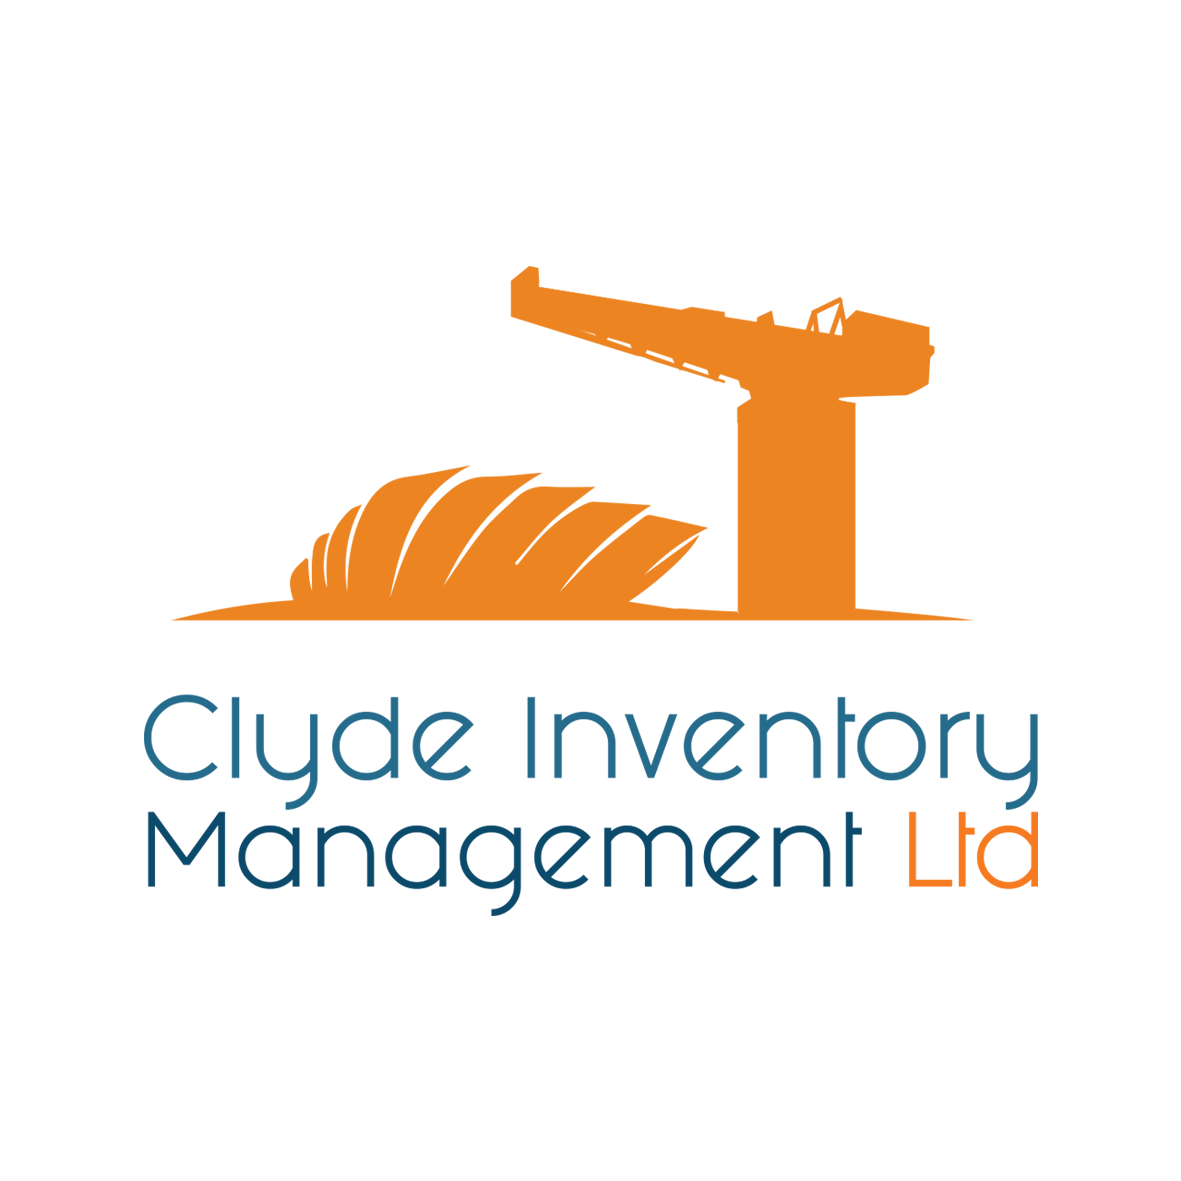 Clyde Inventory Management Ltd